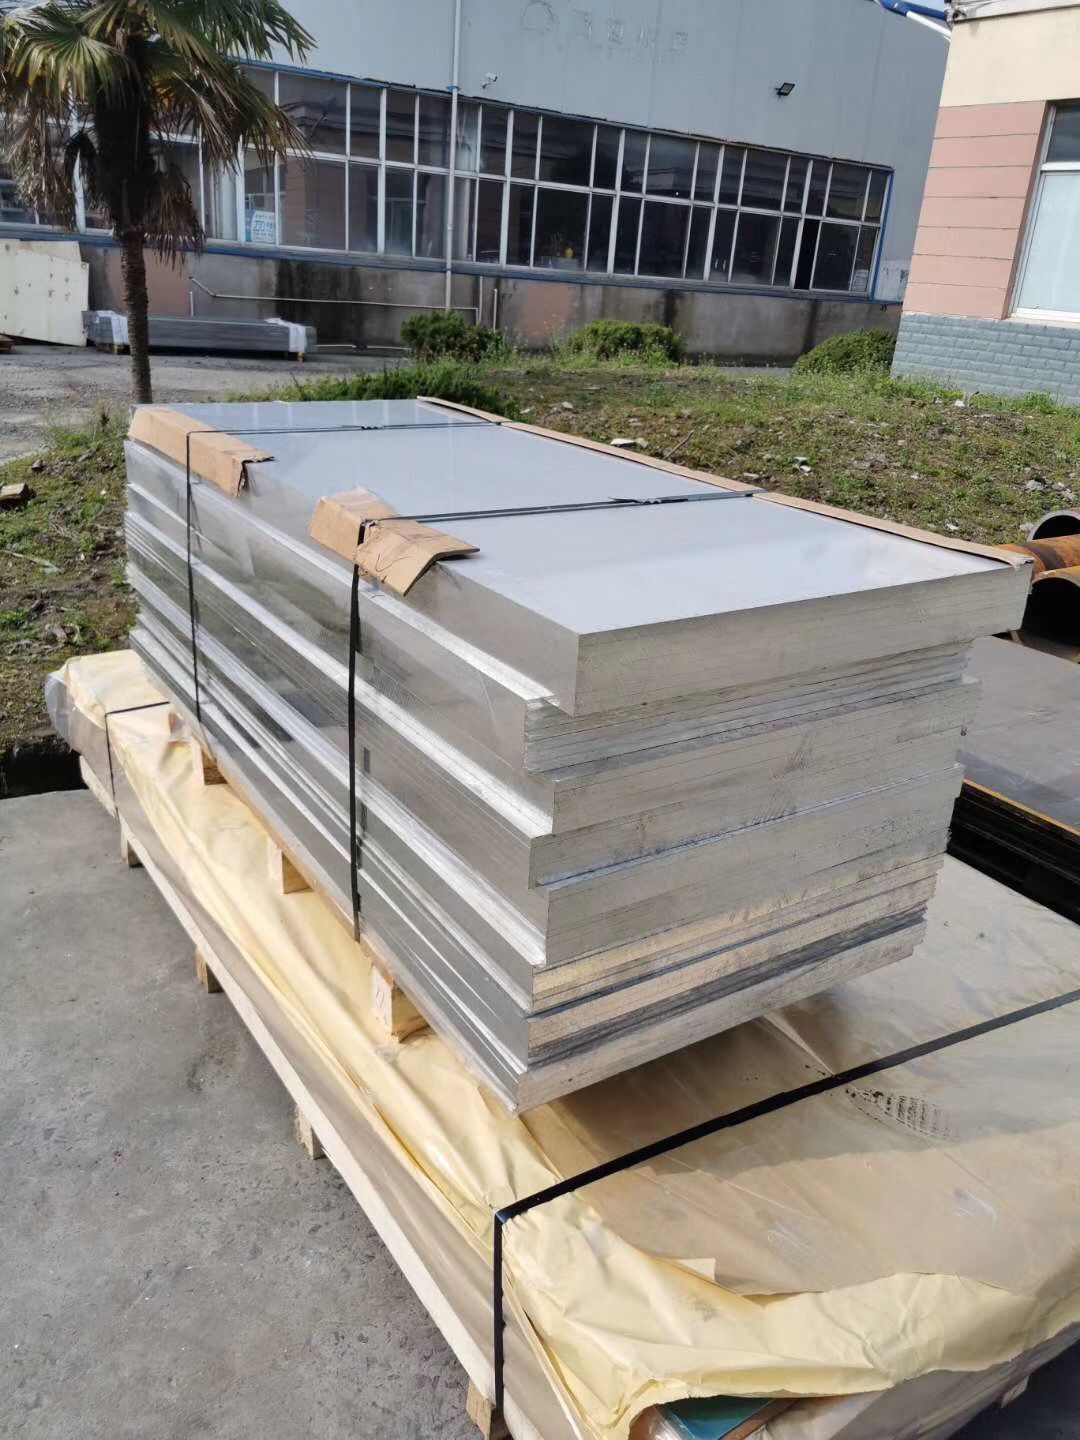 5083-H111鋁板是什麼狀態